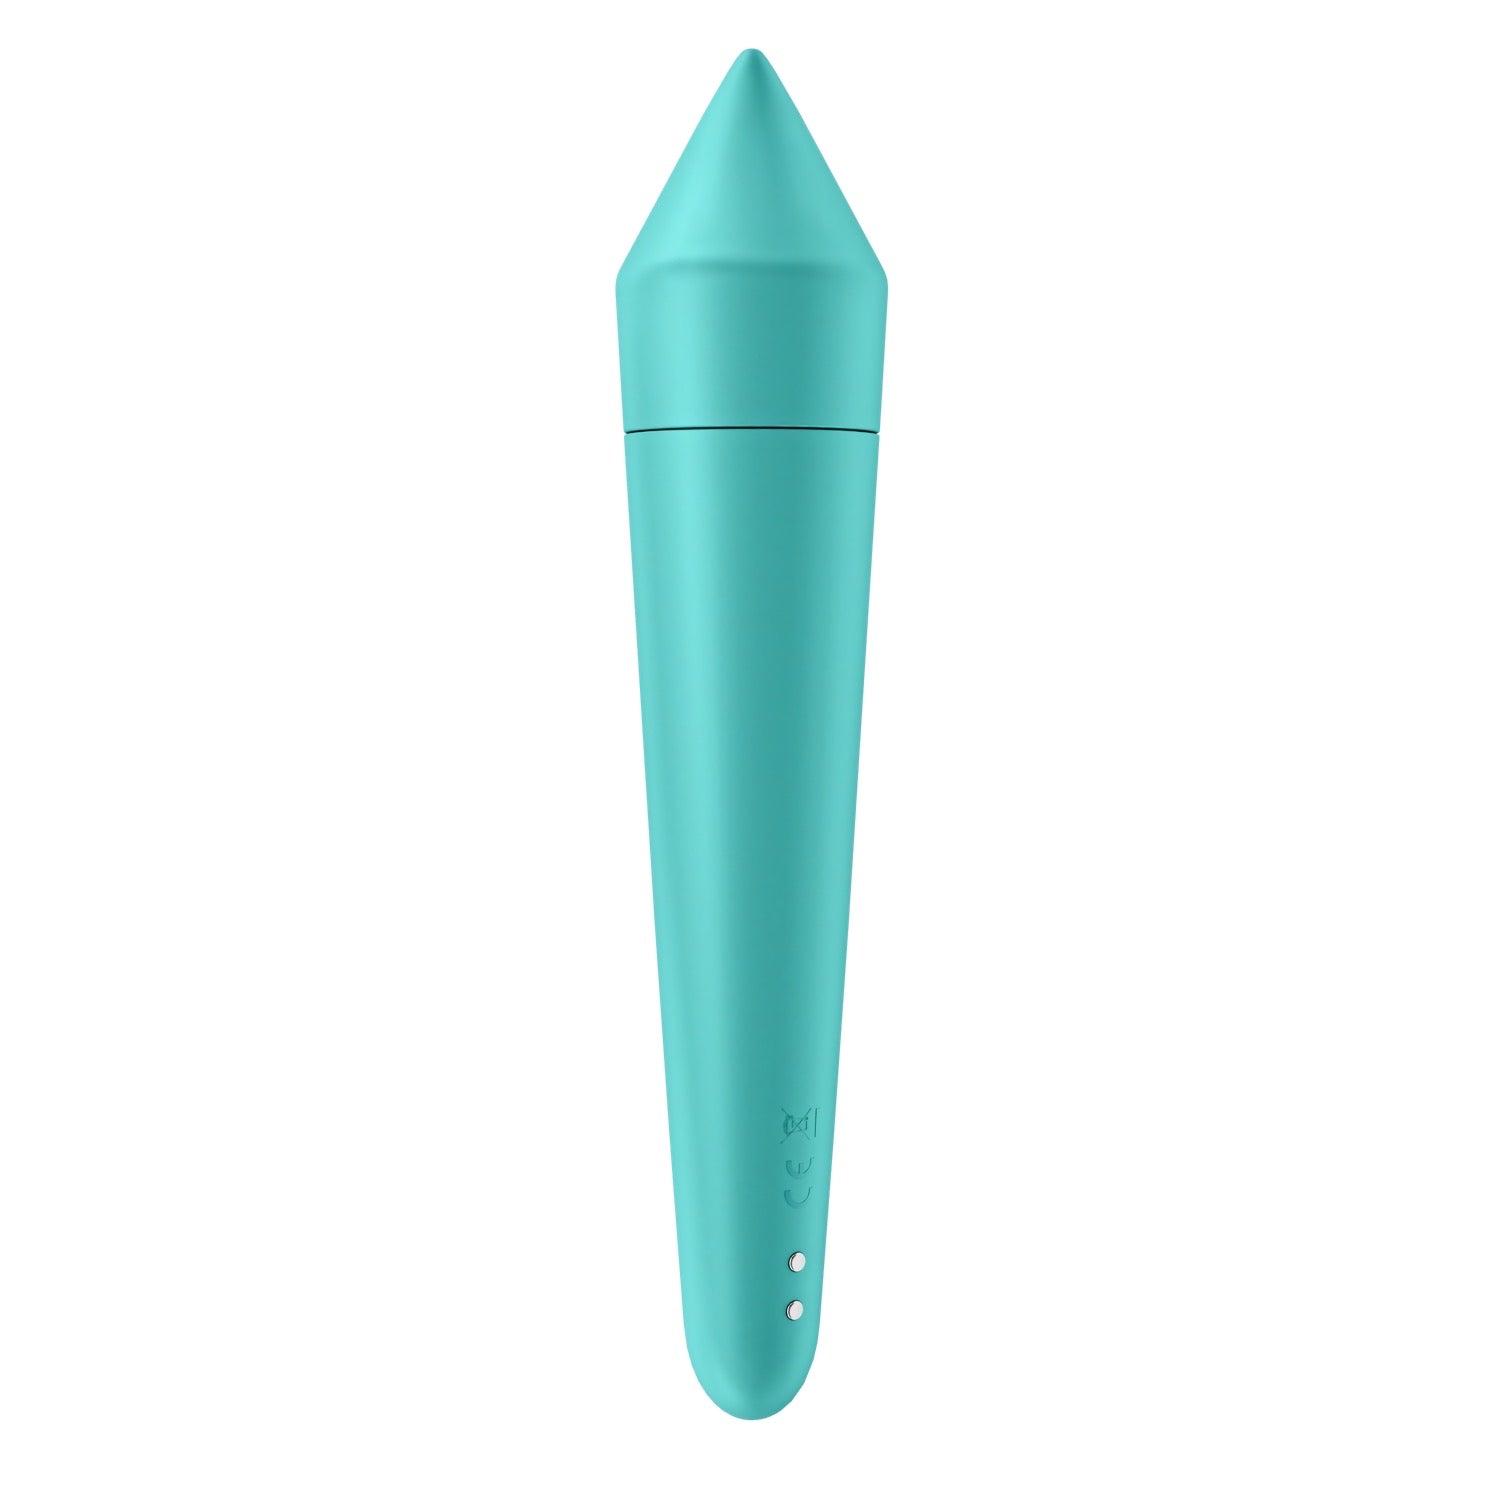 Satisfyer Ultra Power Bullet 8 - Turquoise by Satisfyer